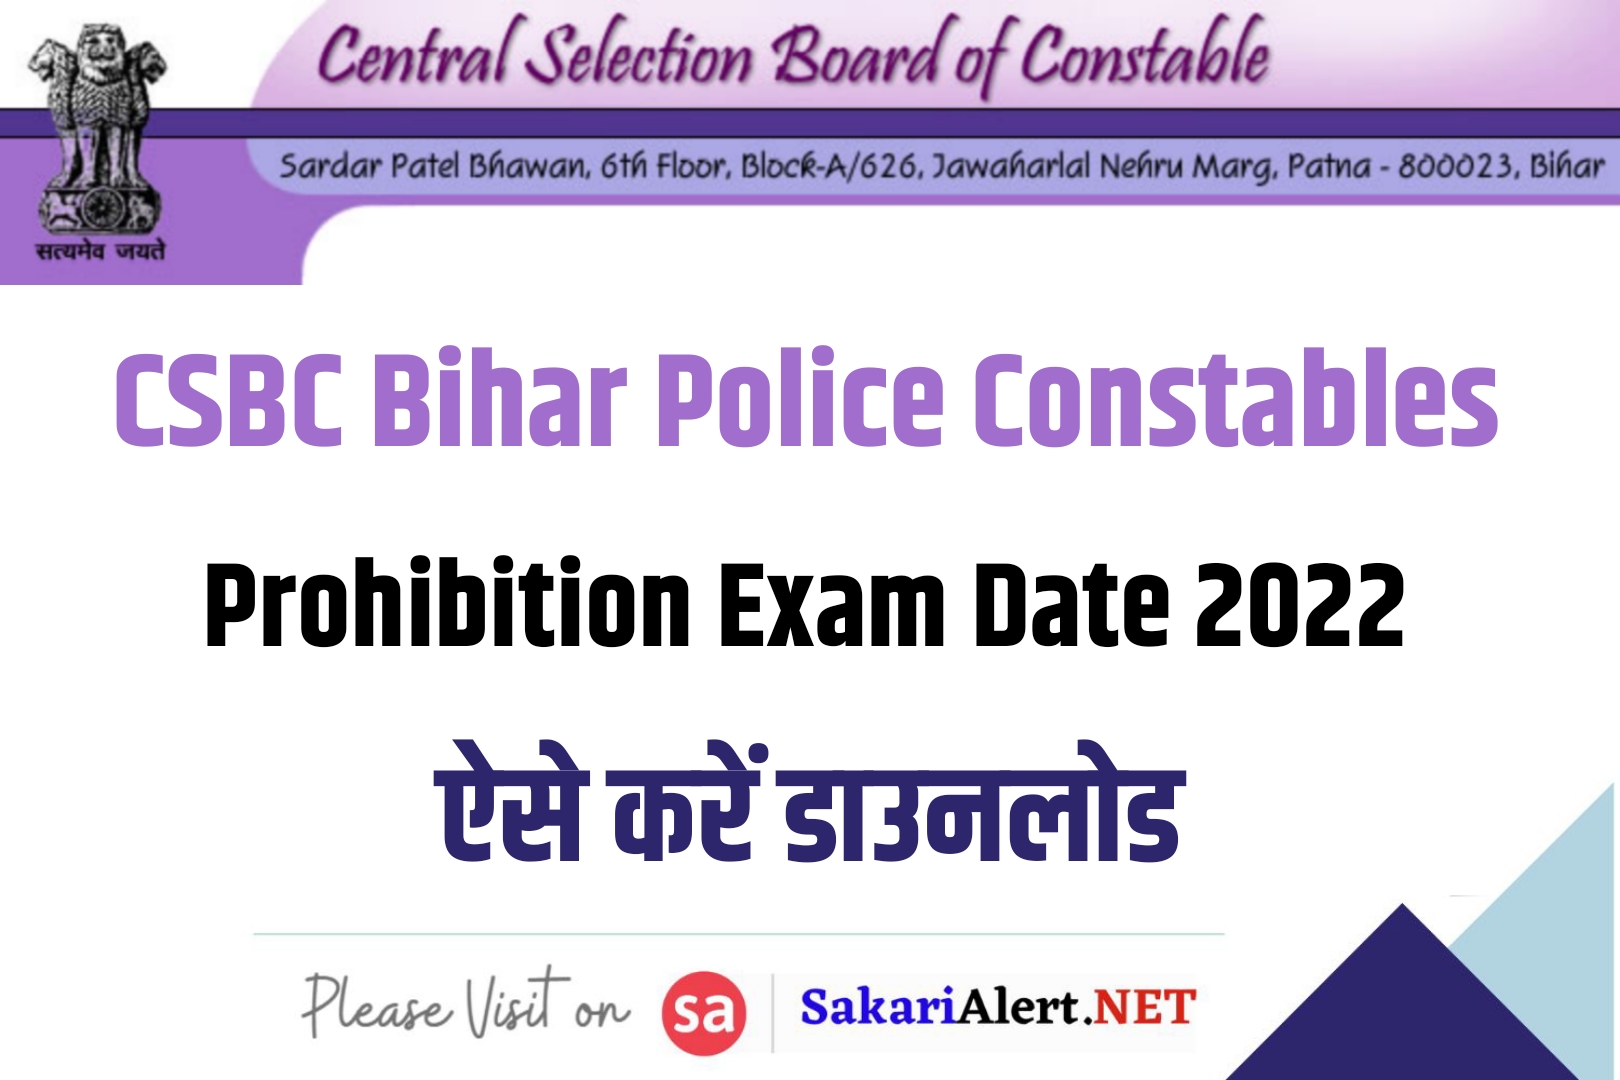 CSBC Bihar Police Constables Prohibition Exam Date 2022